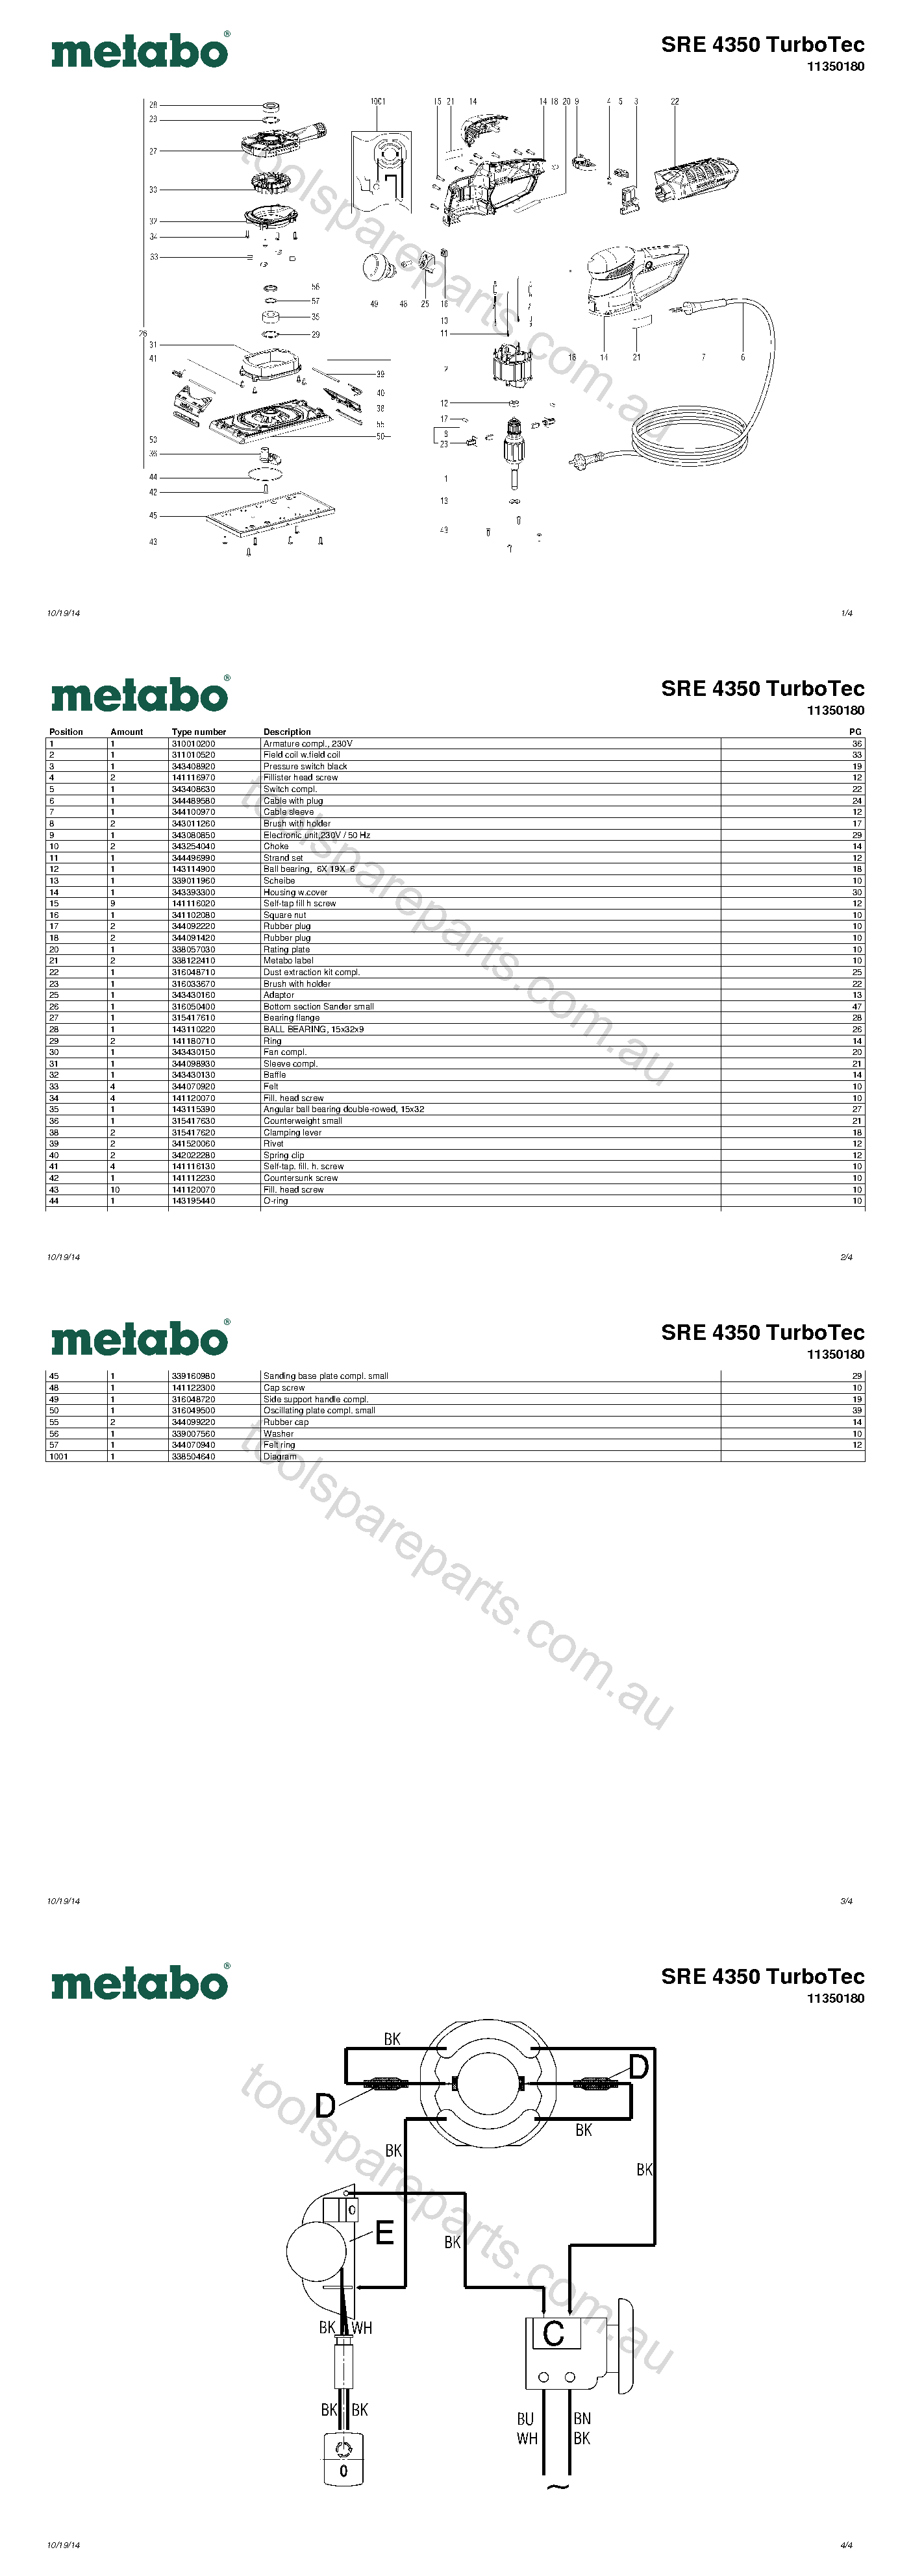 Metabo SRE 4350 TurboTec 11350180  Diagram 1